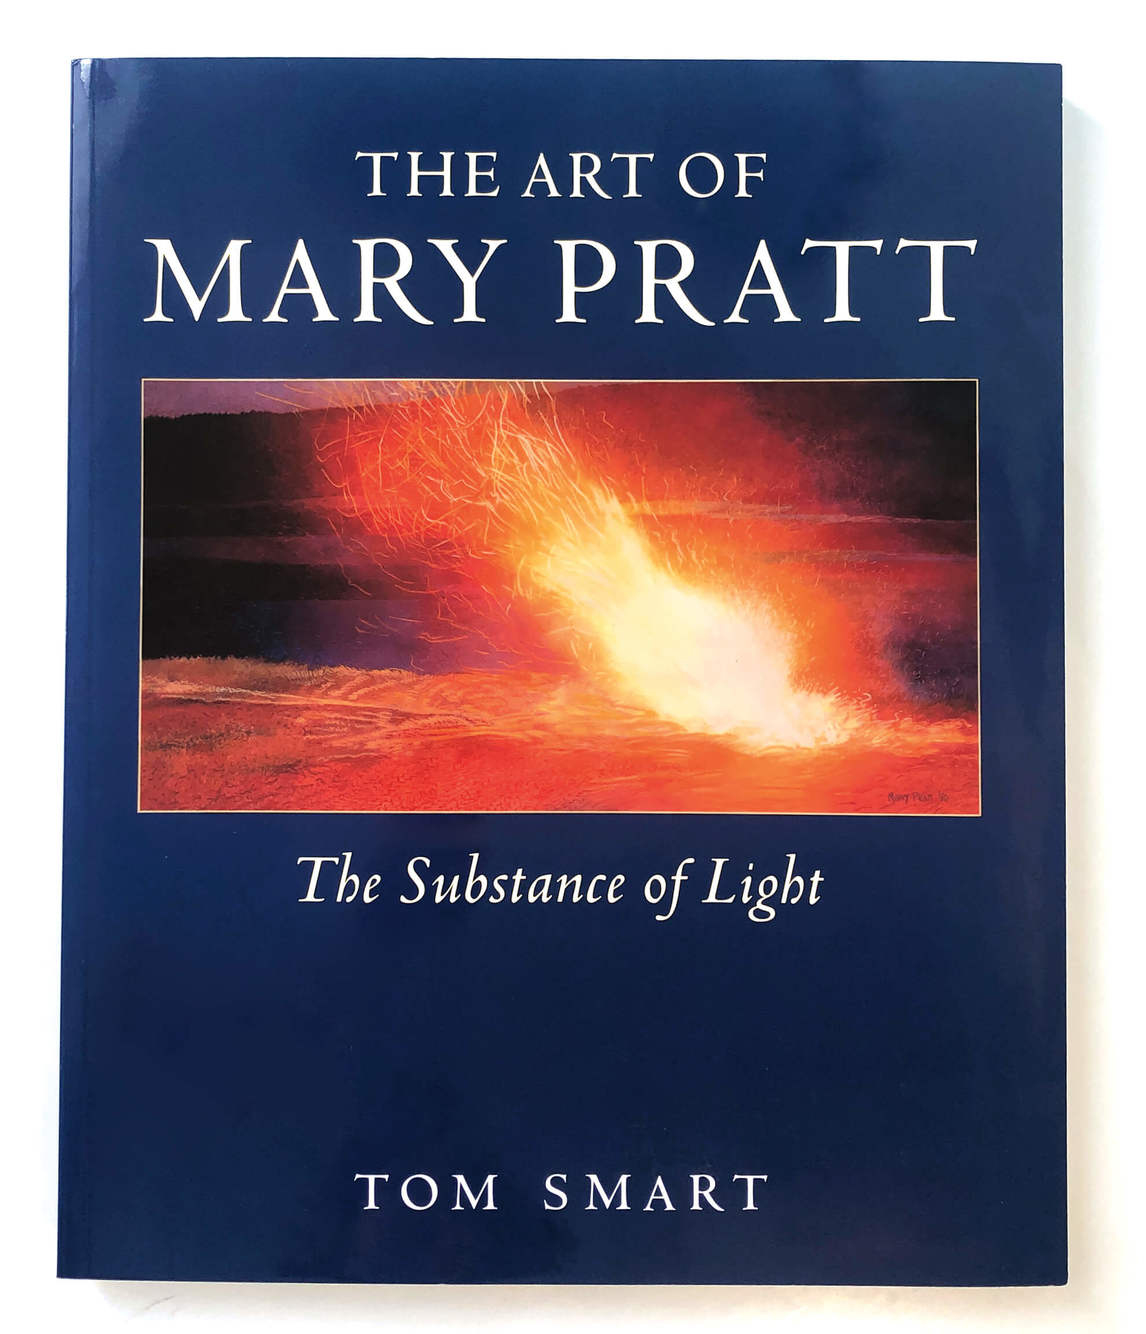 The Art of Mary Pratt: The Substance of Light, 1995, by Tom Smart